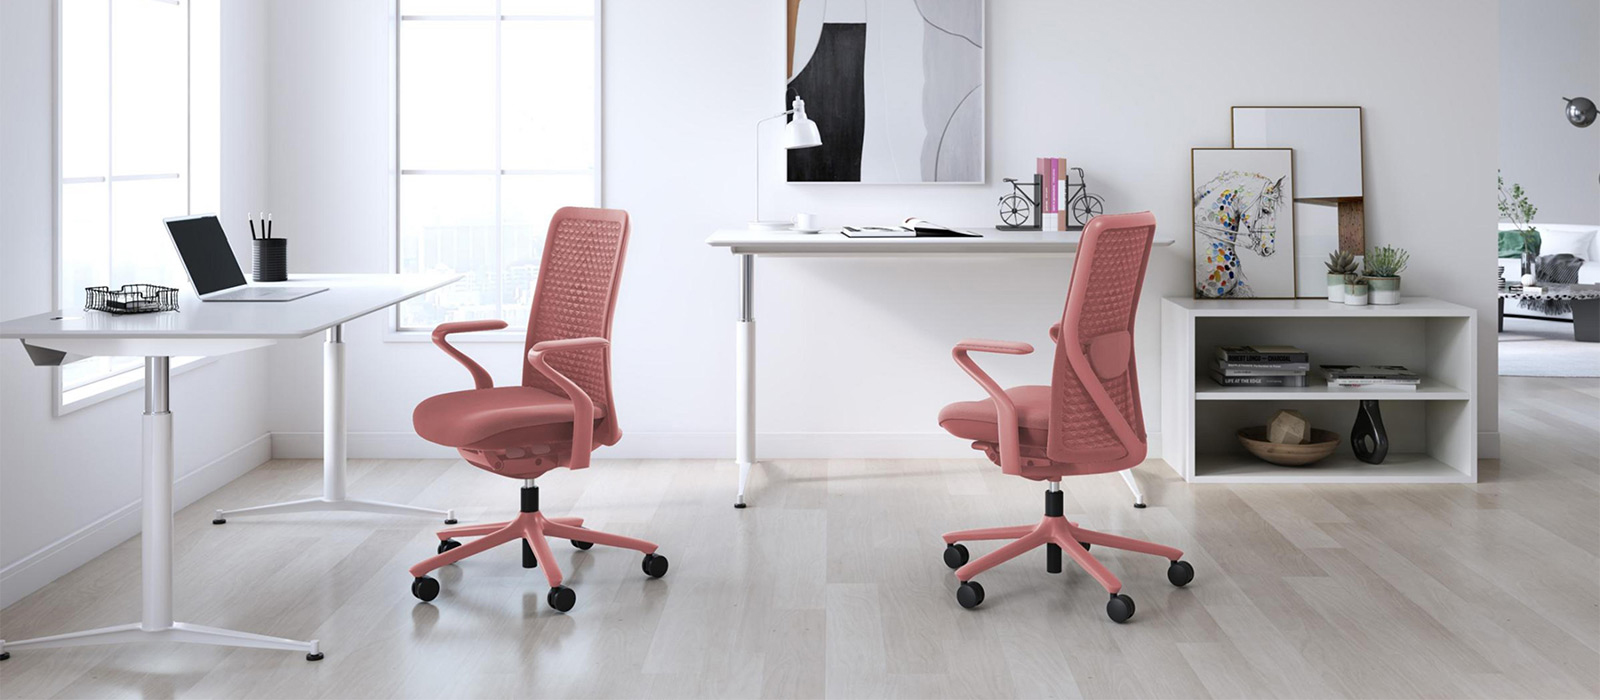 Workaholic™ Premium Poly chair - Office desk